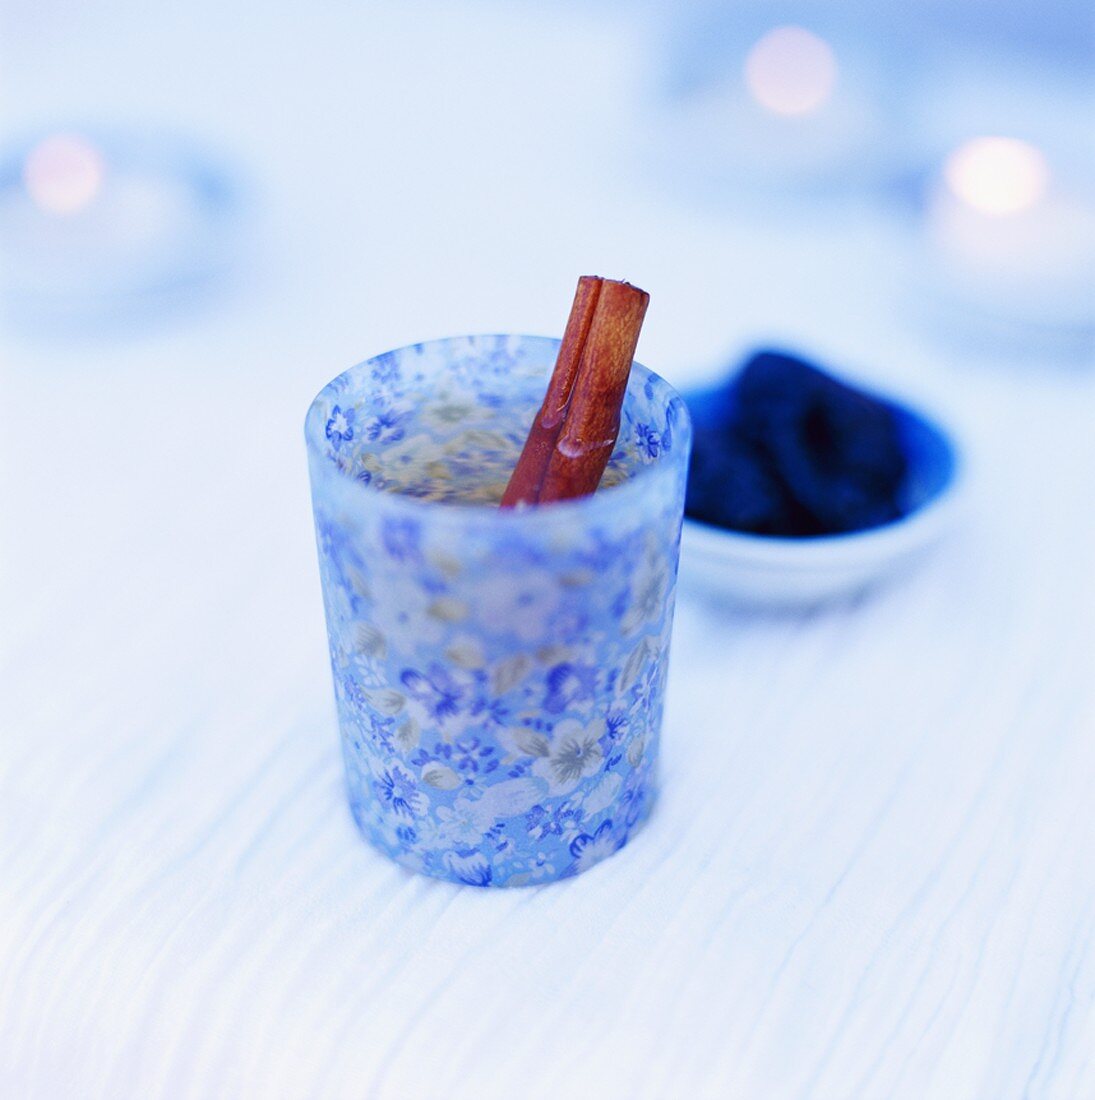 Tea with cinnamon stick in blue glass